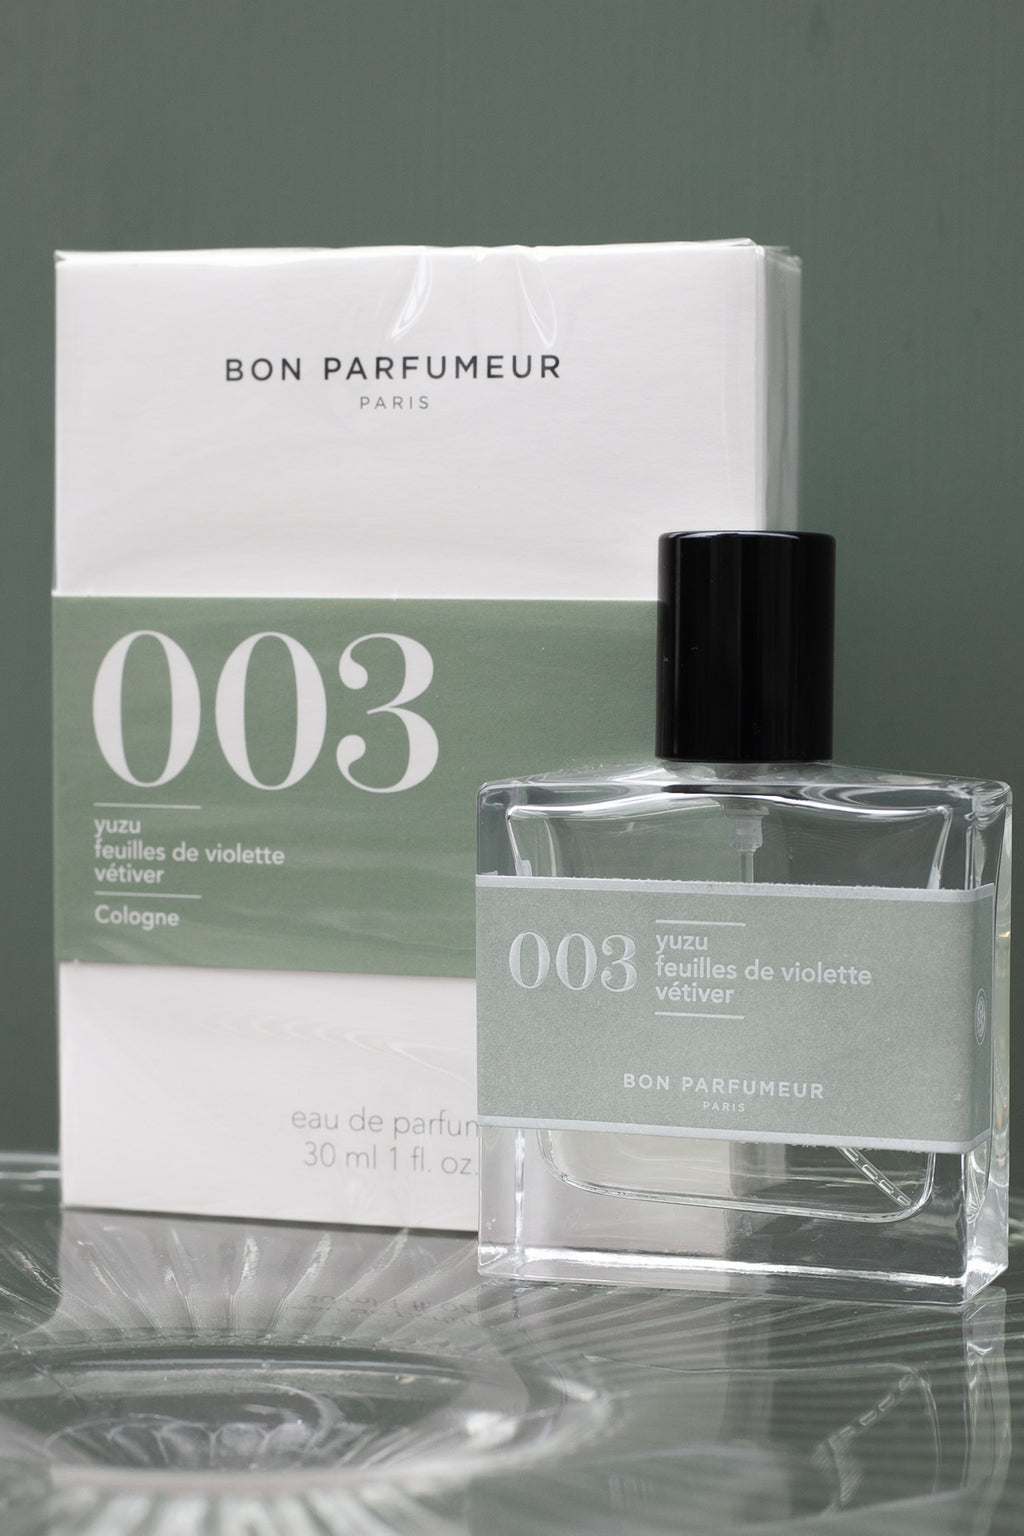 Bon Parfumeur 003 Yuzu, Violet Leaves, Vetiver Perfume - The Mercantile London